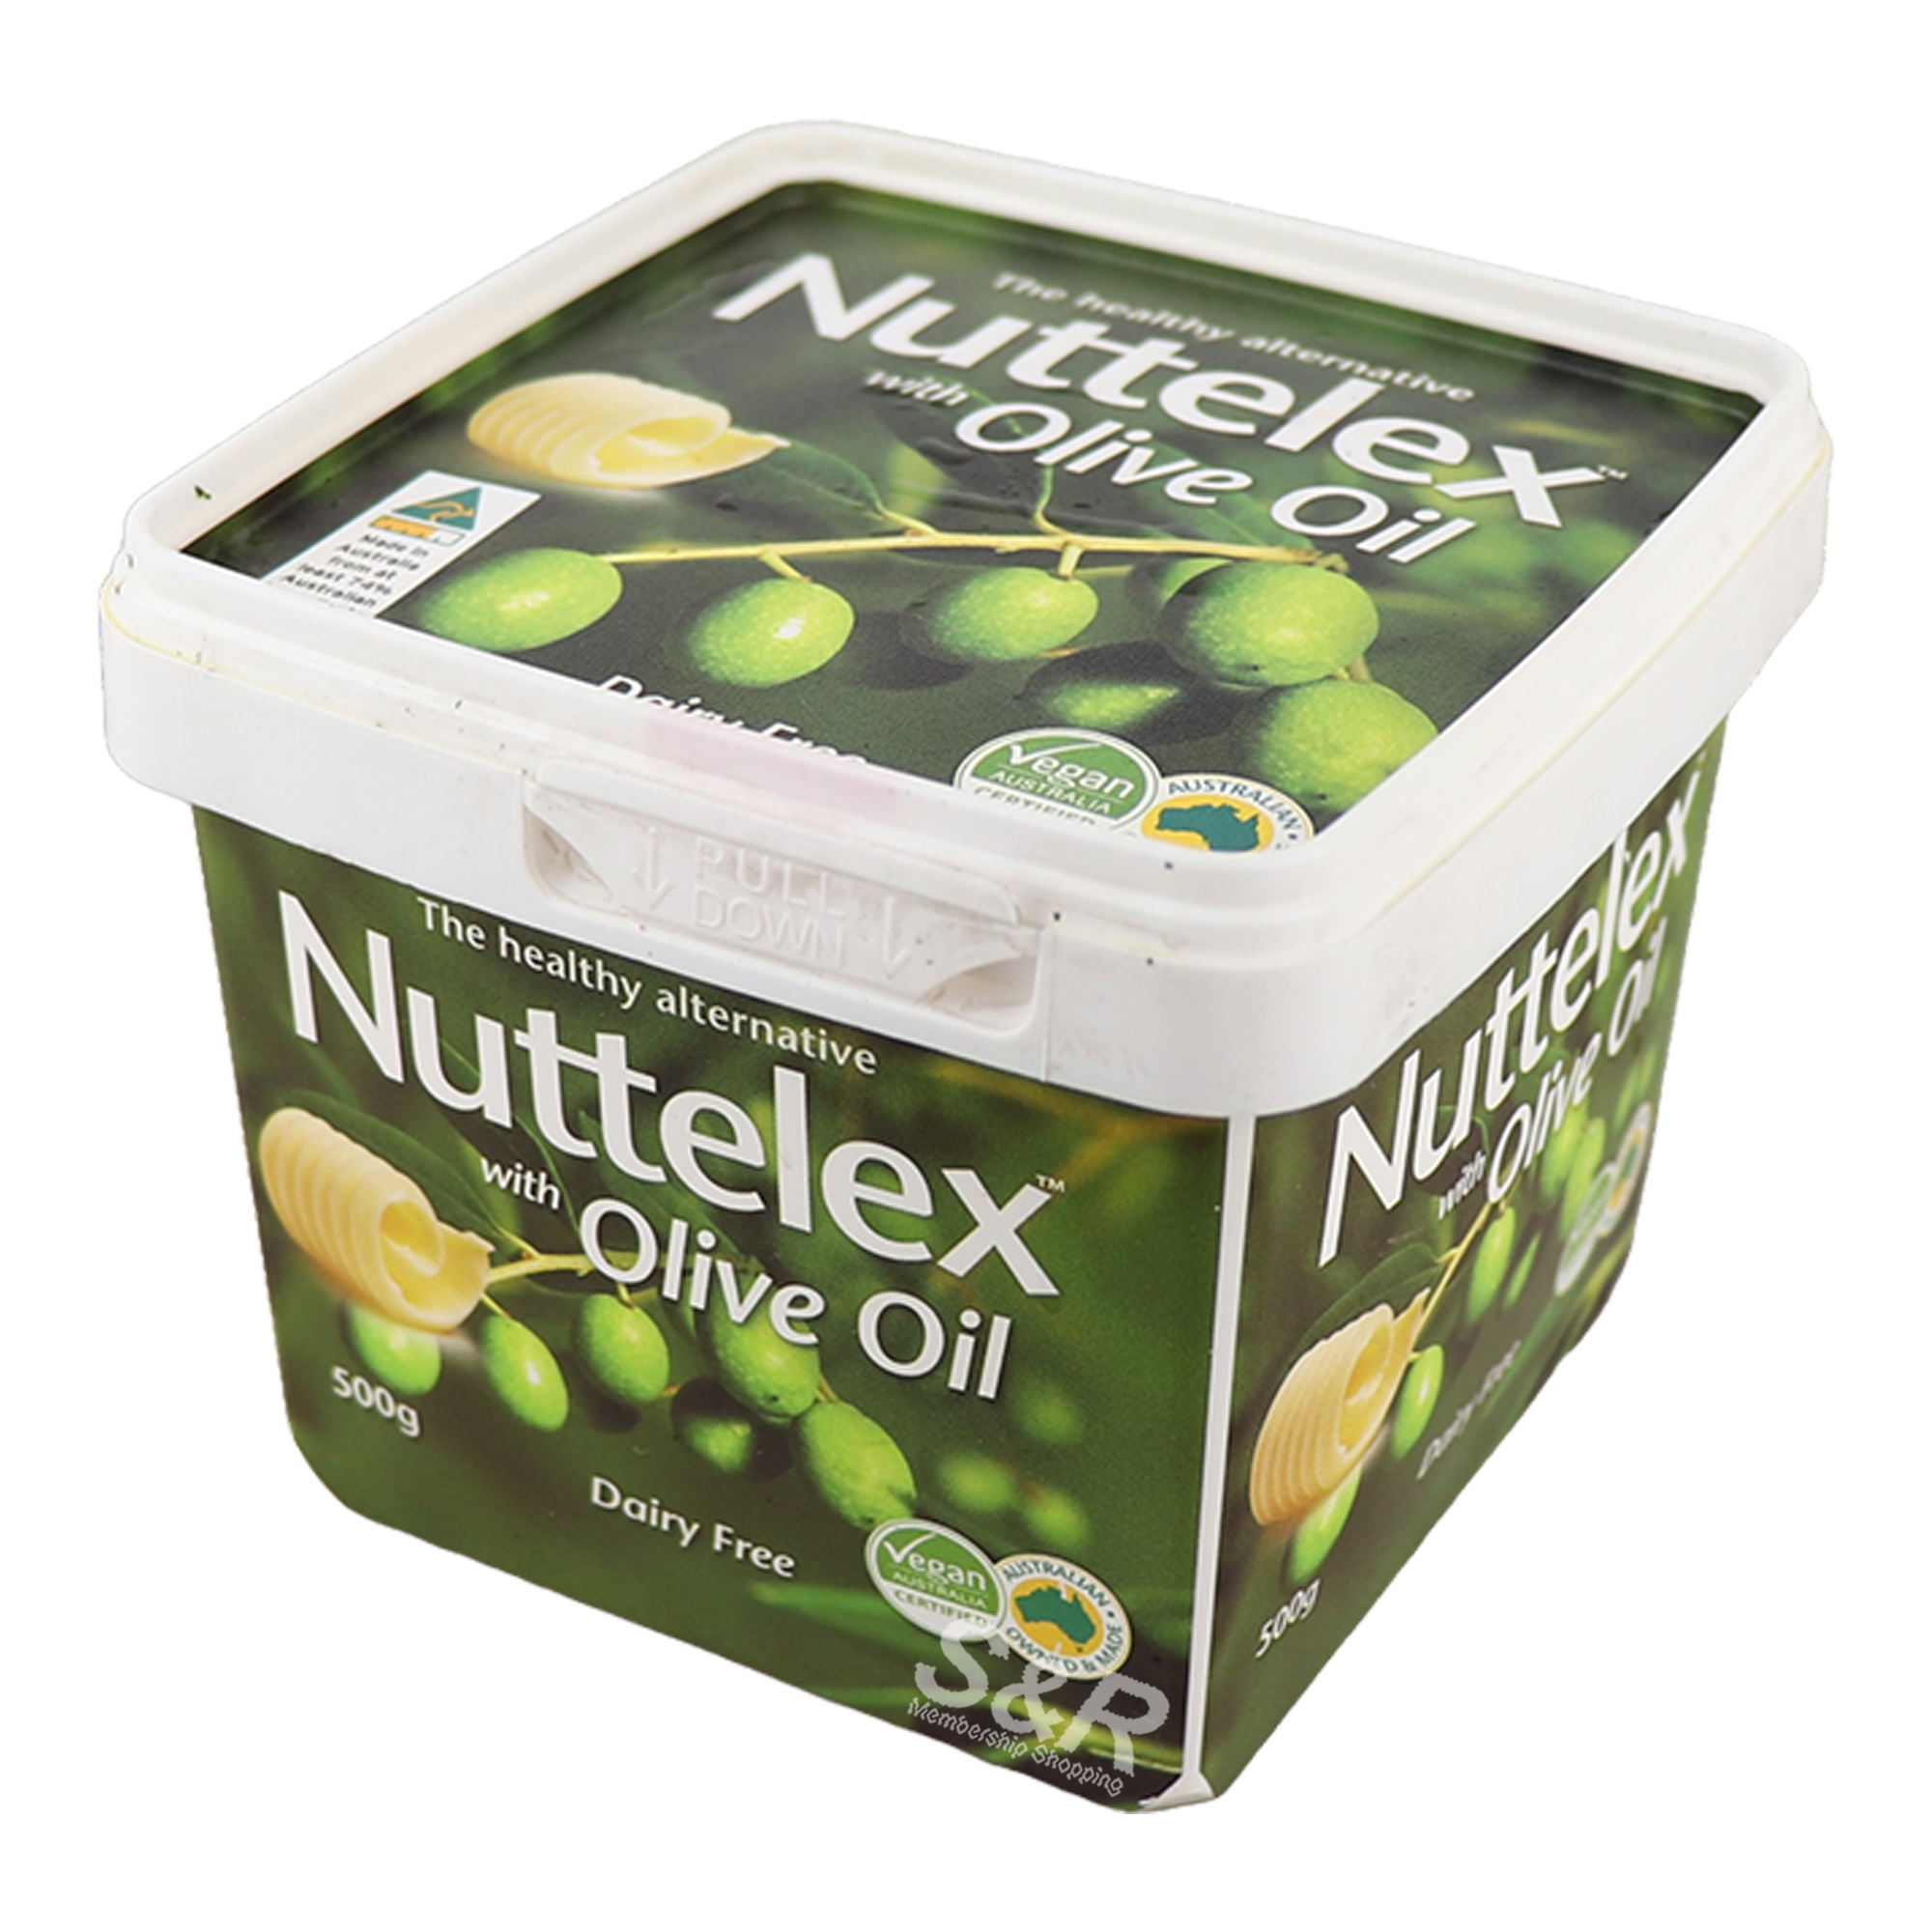 Nuttelex with Olive Oil Margarine 500g